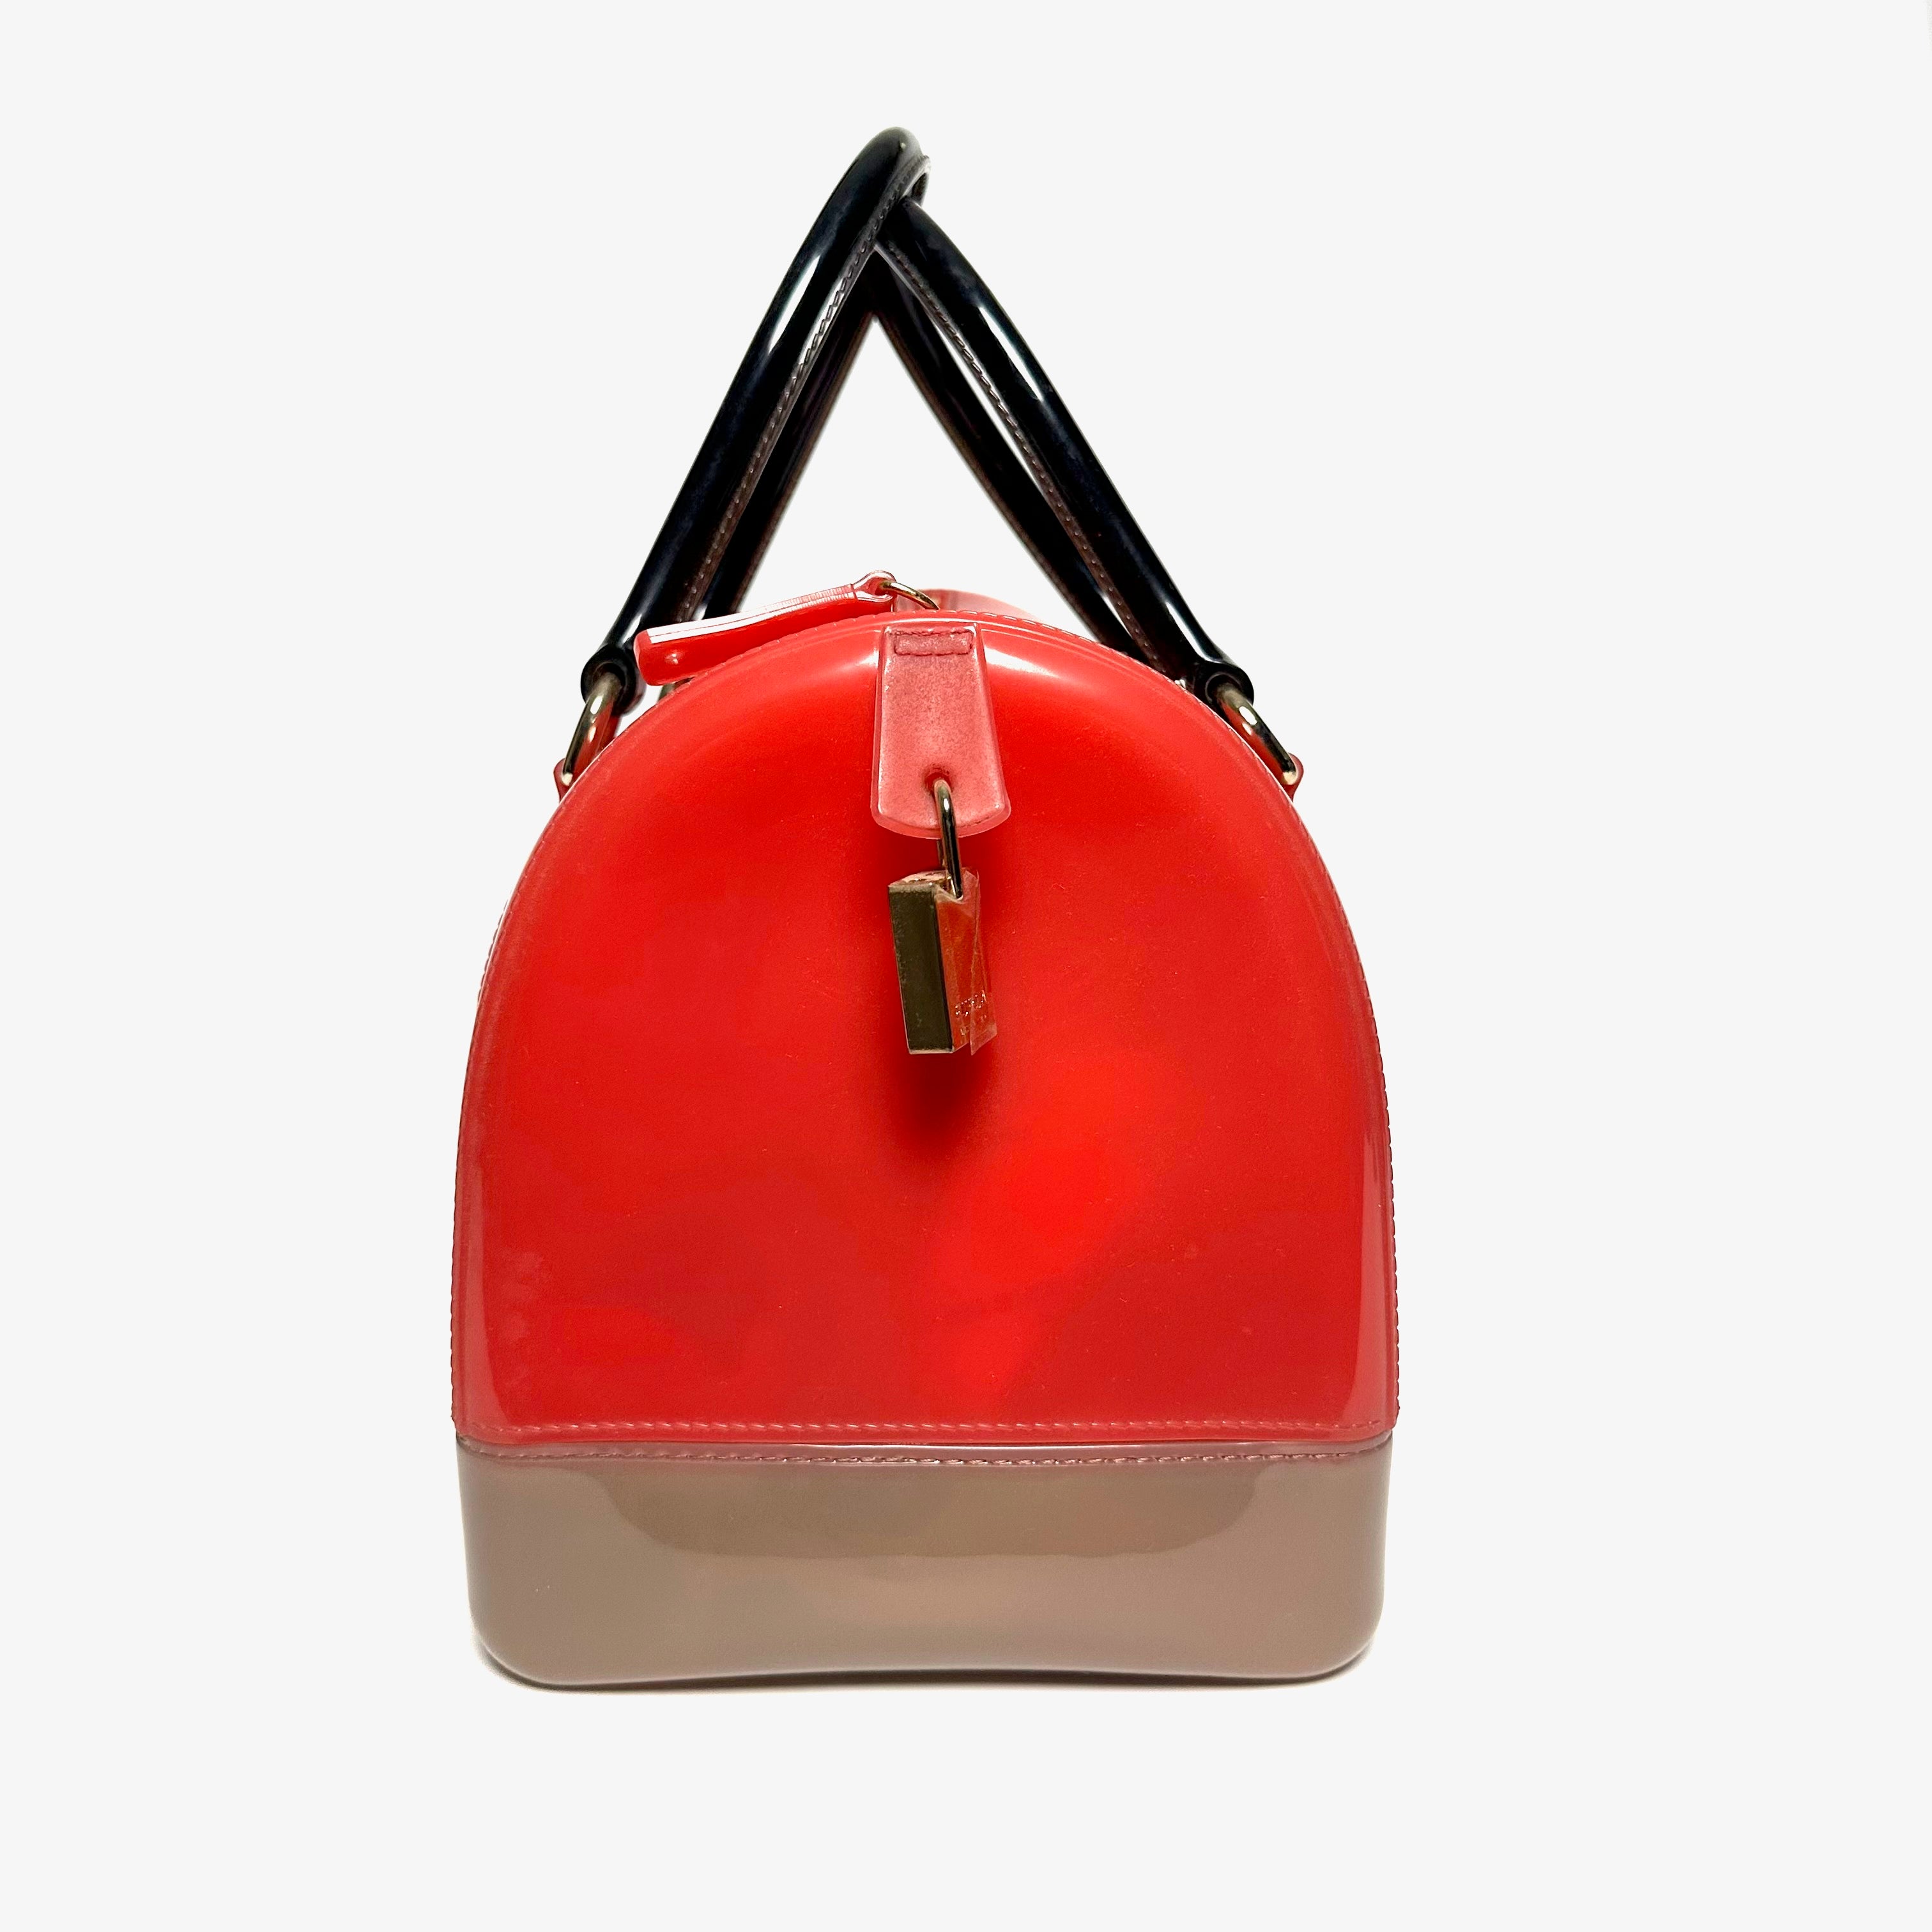 Foxxy Boutique | Women's Accessories, Metro Detroit | Handbags